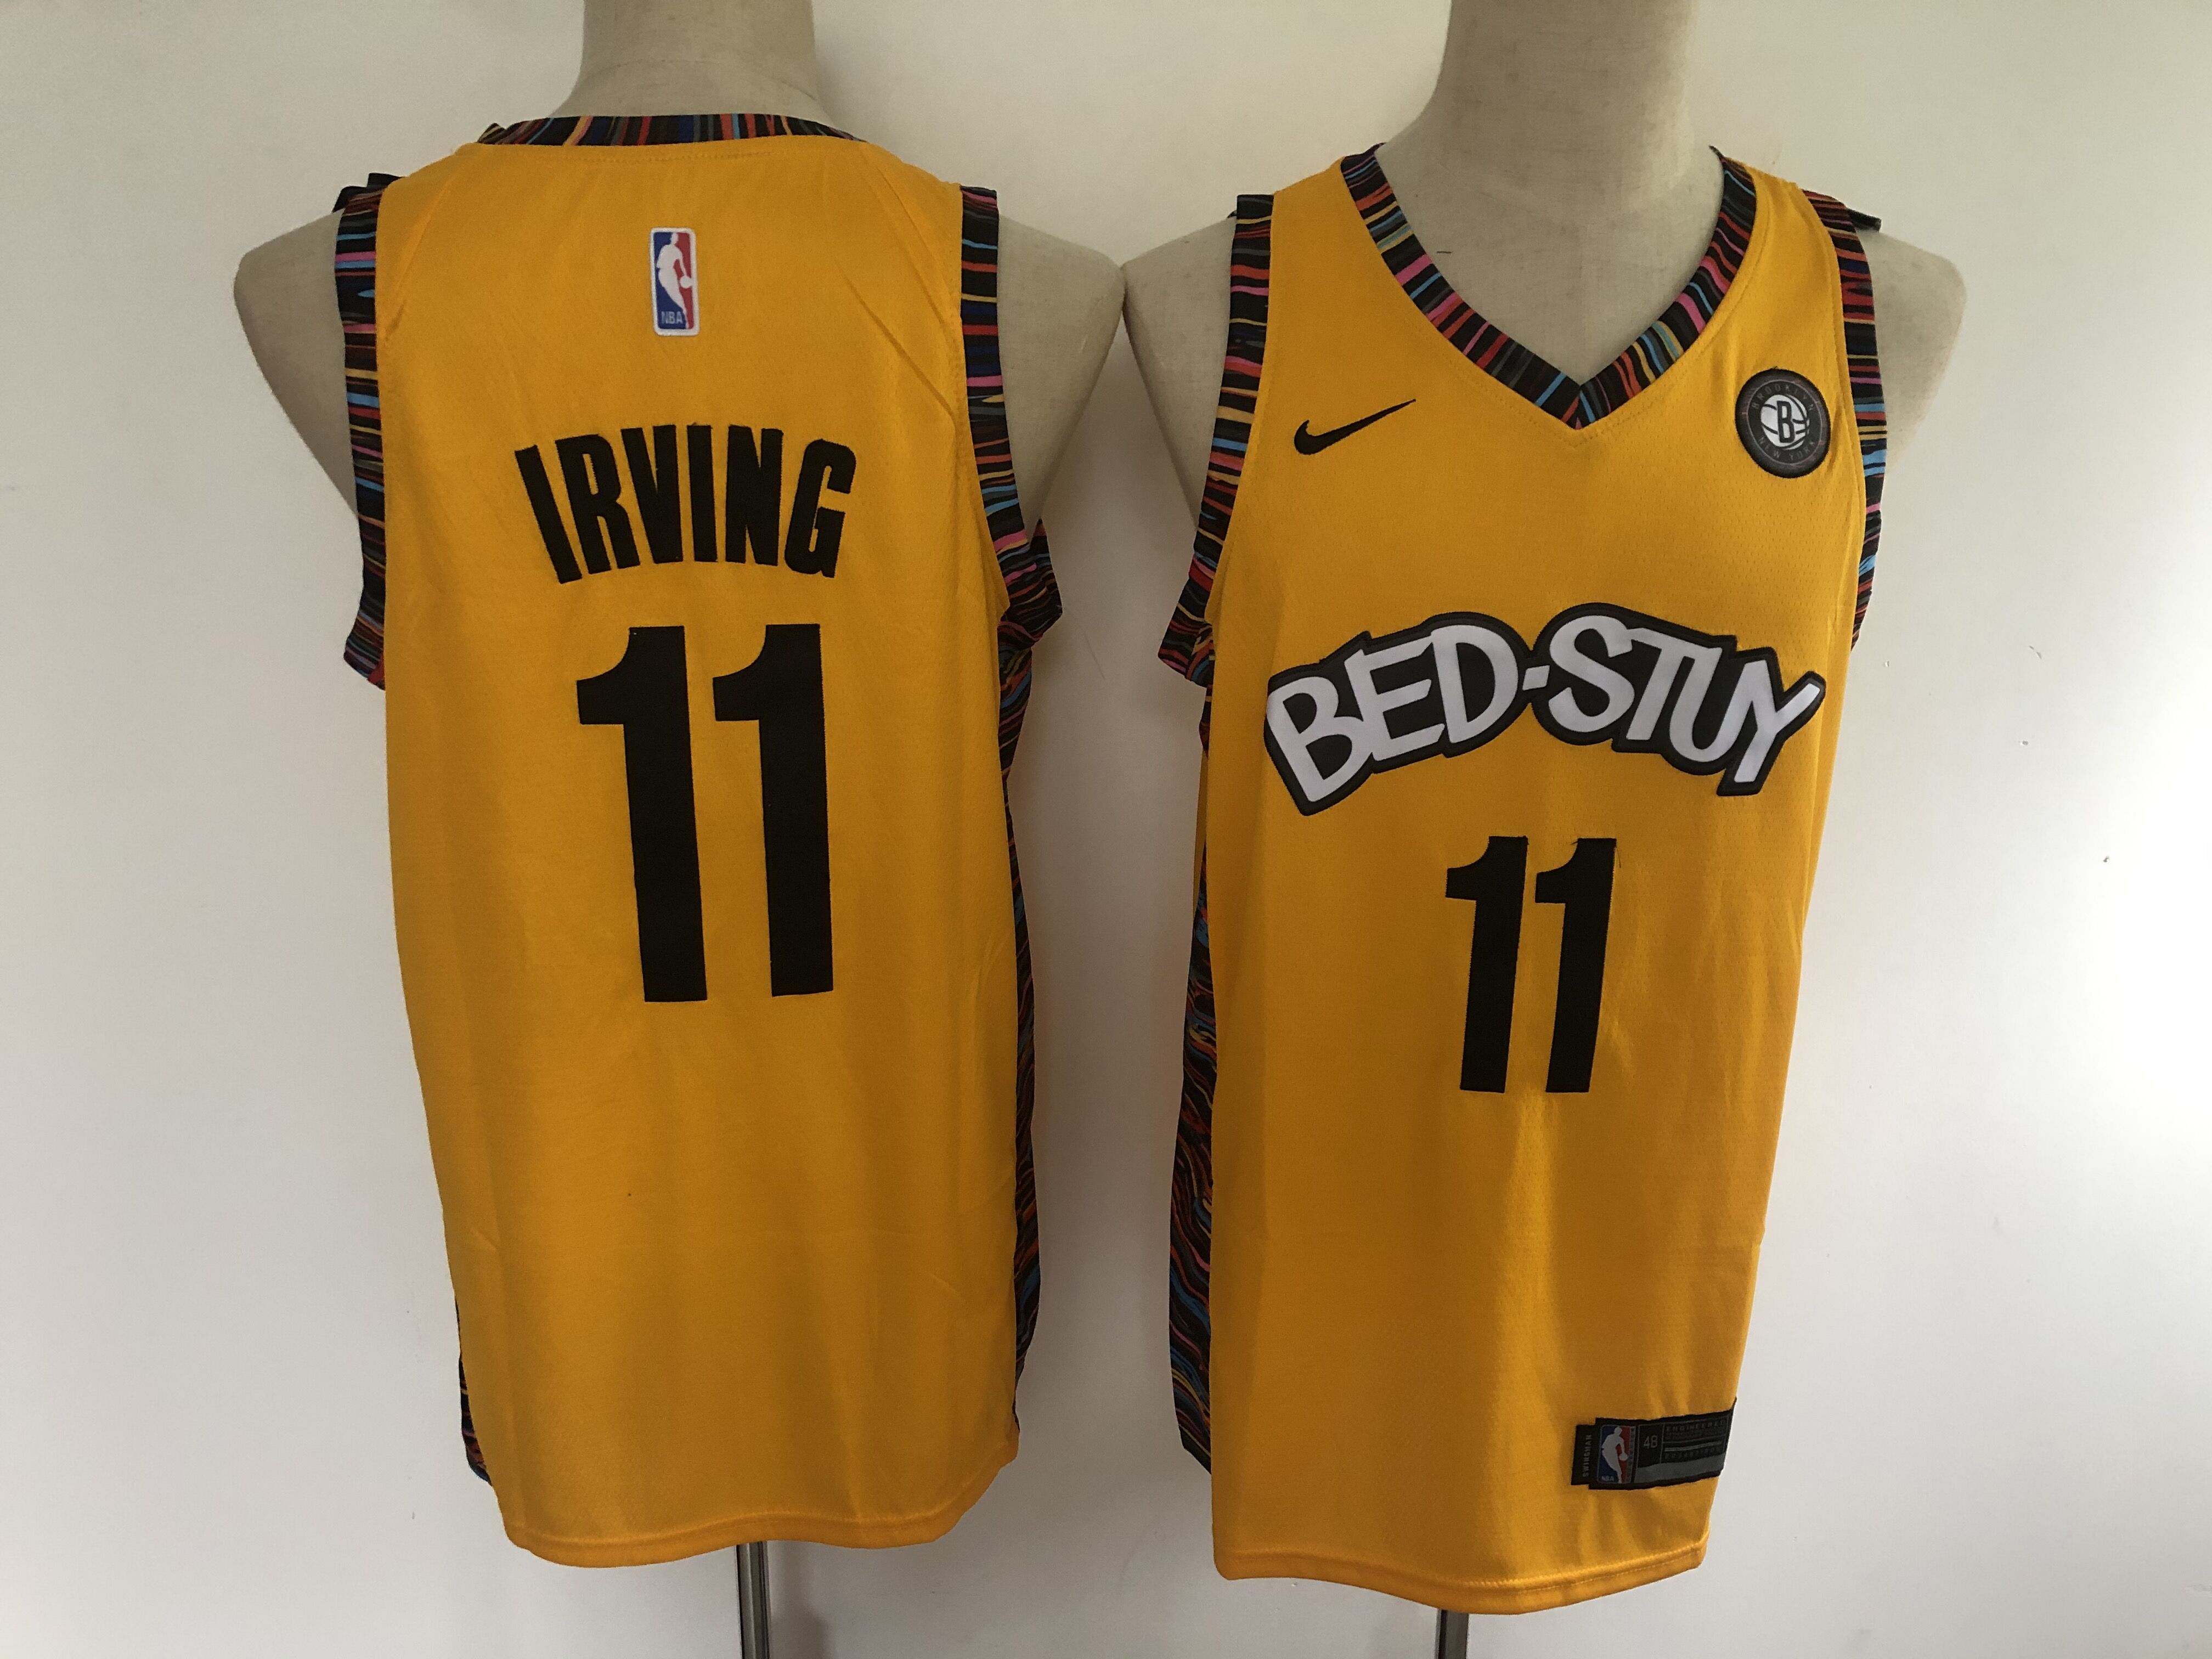 2020 Men Brooklyn Nets #11 Irving yellow Nike Game NBA Jerseys